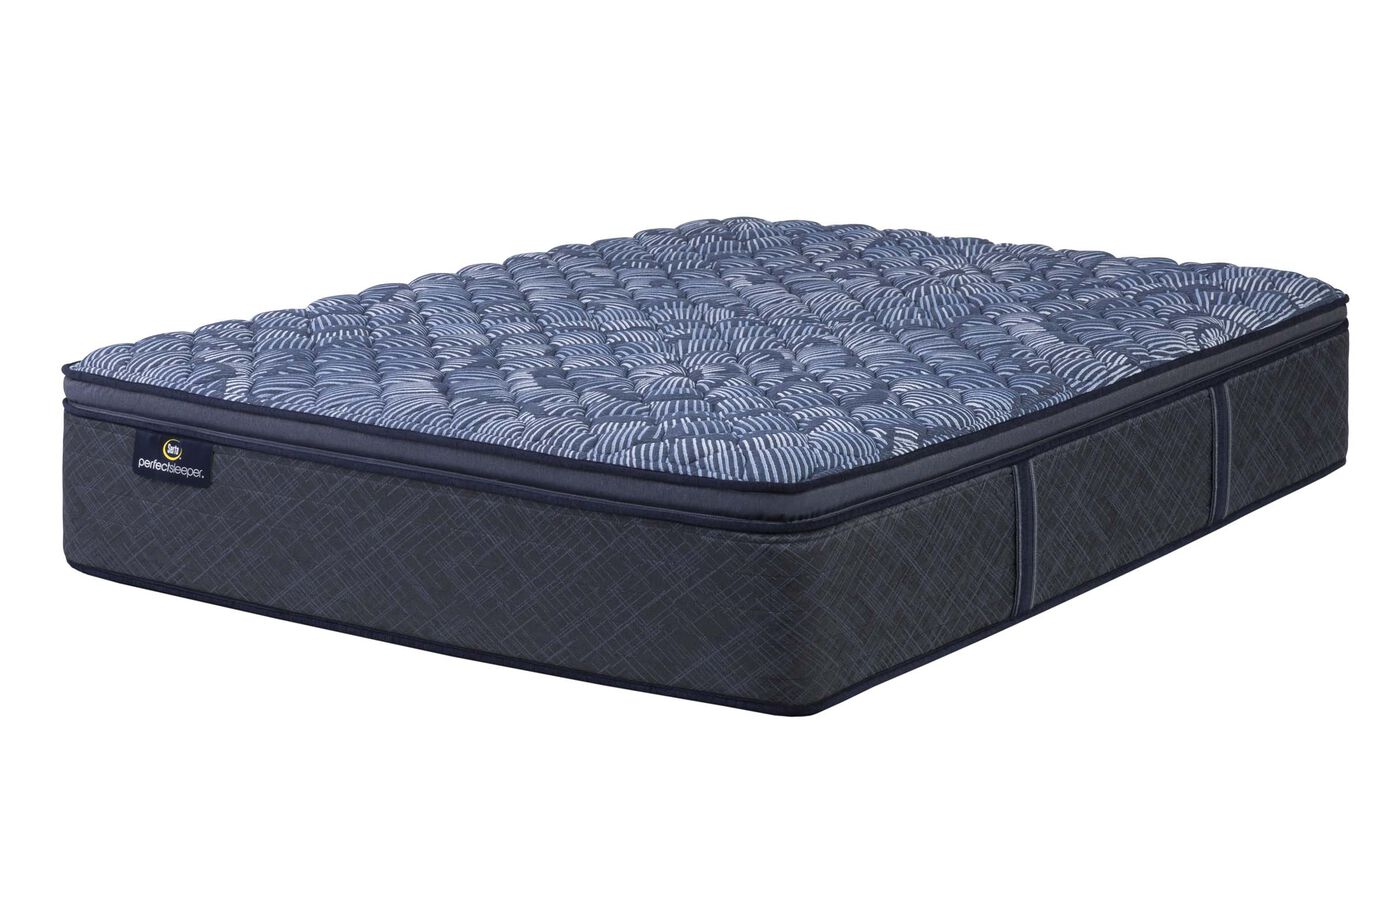 Serta Perfect Sleeper Bengal Bay Firm Pillow Top Mattress 14.5" image number 4